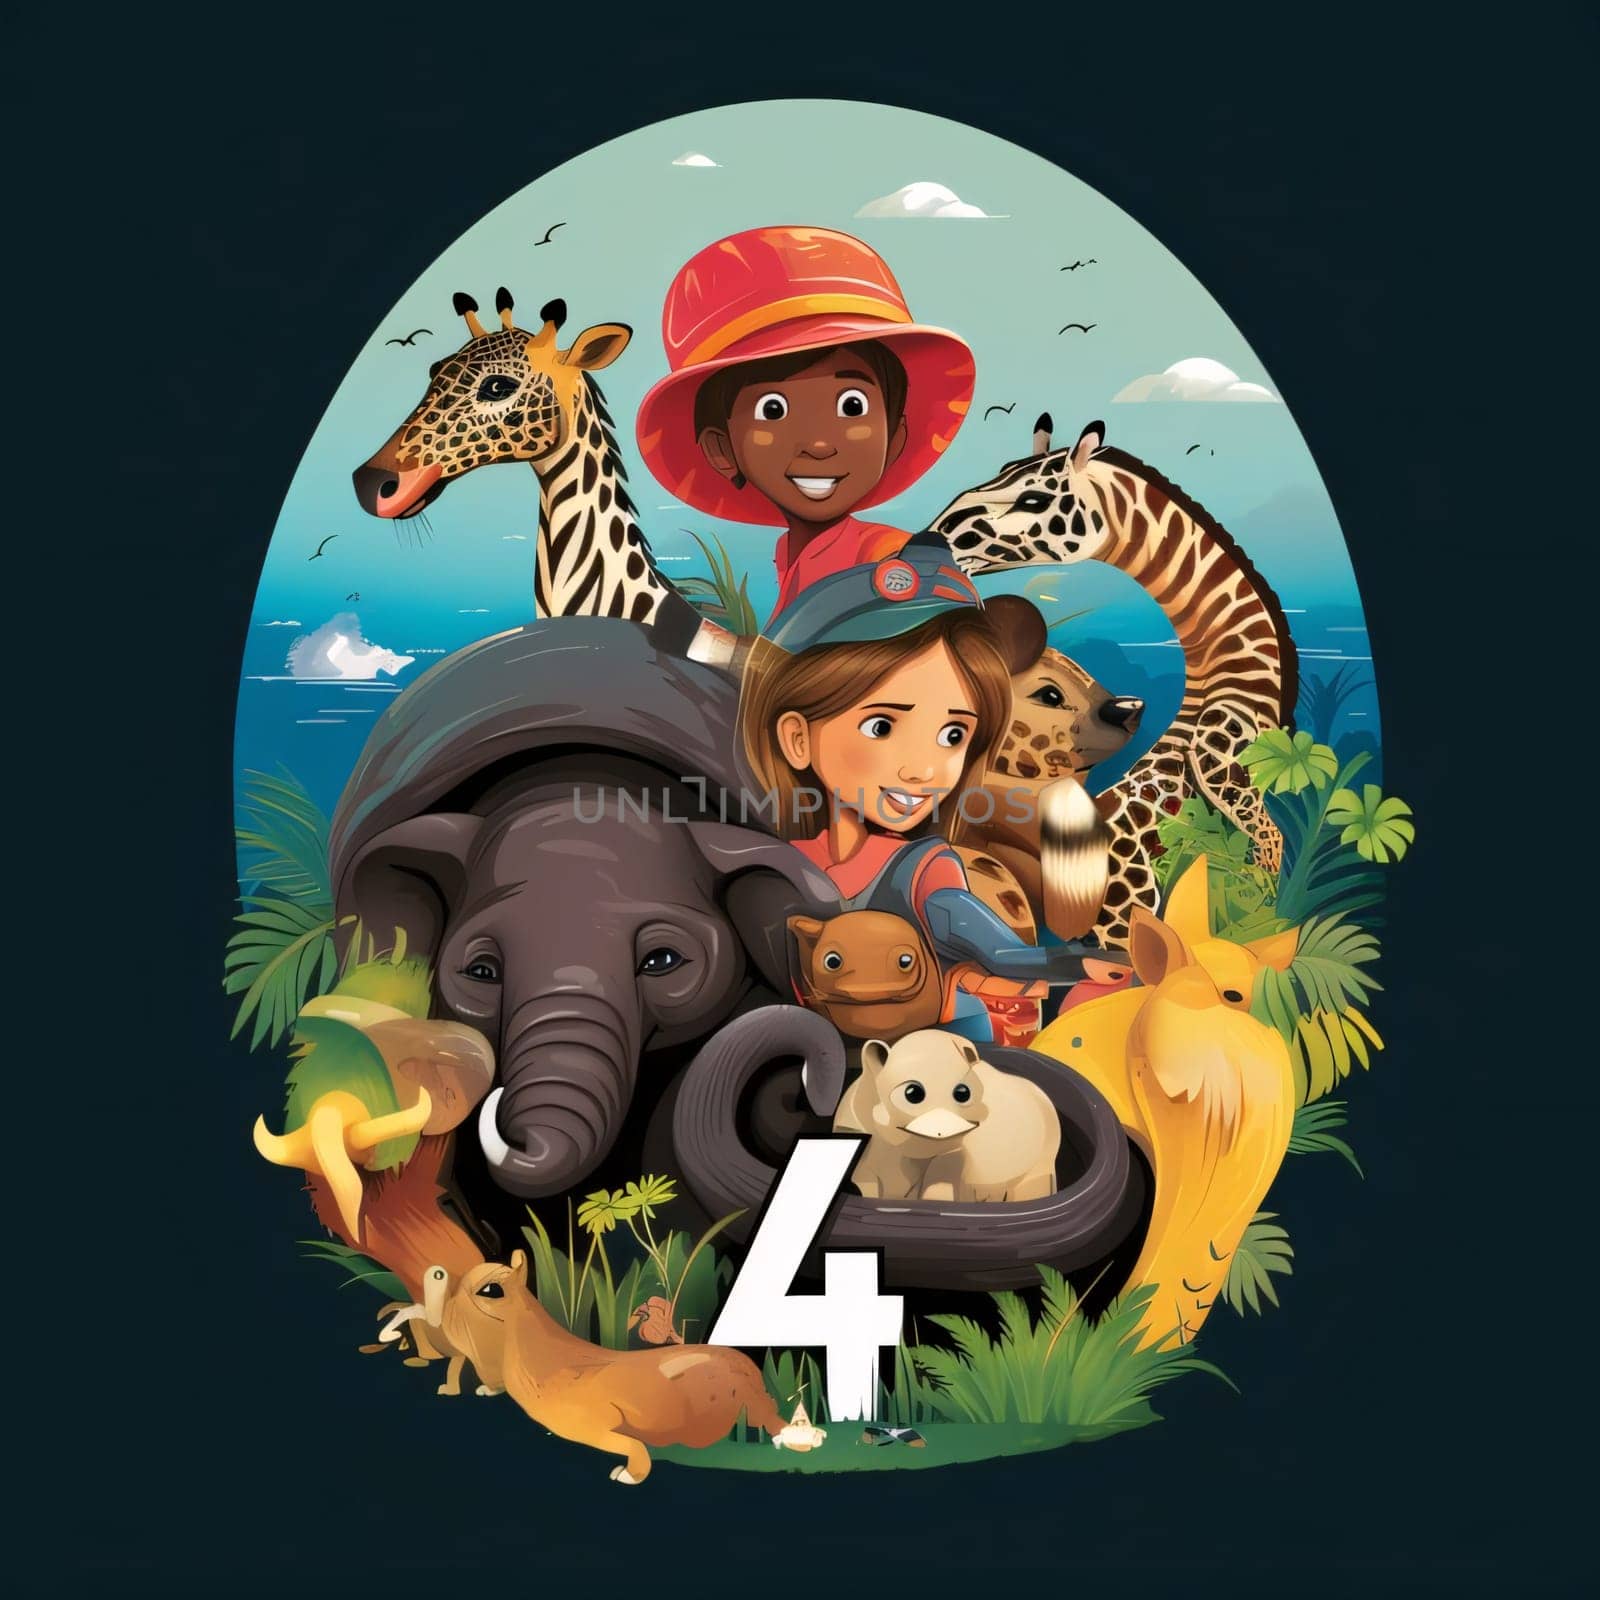 Graphic numbers: Children in safari theme with animals and safari hat illustration.